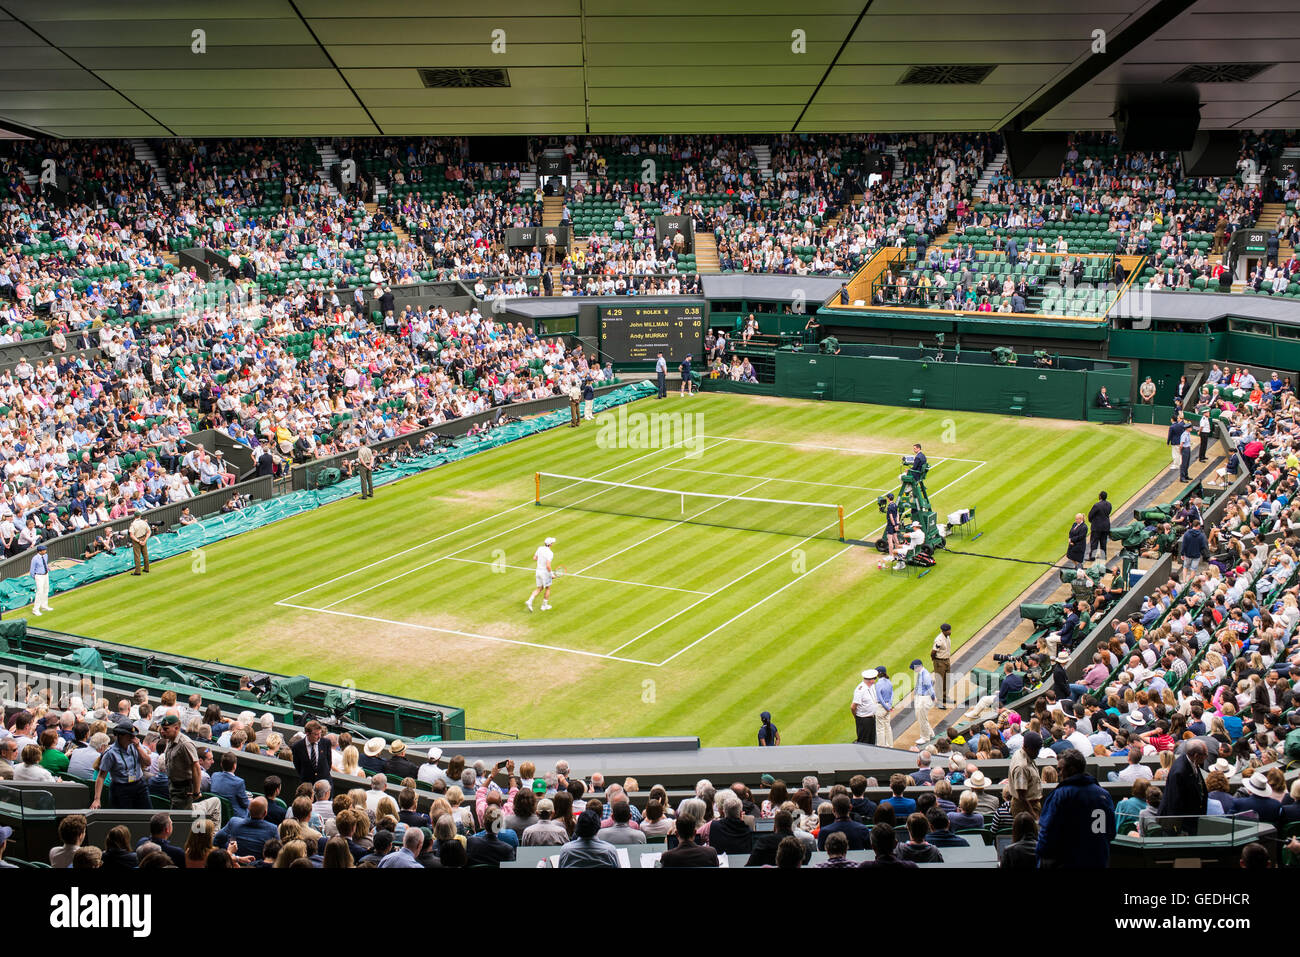 Vista del centro de la Cancha llena de espectadores viendo un partido en Wimbledon All England Lawn Tennis Club campeonatos. El torneo de tenis de Wimbledon. Foto de stock